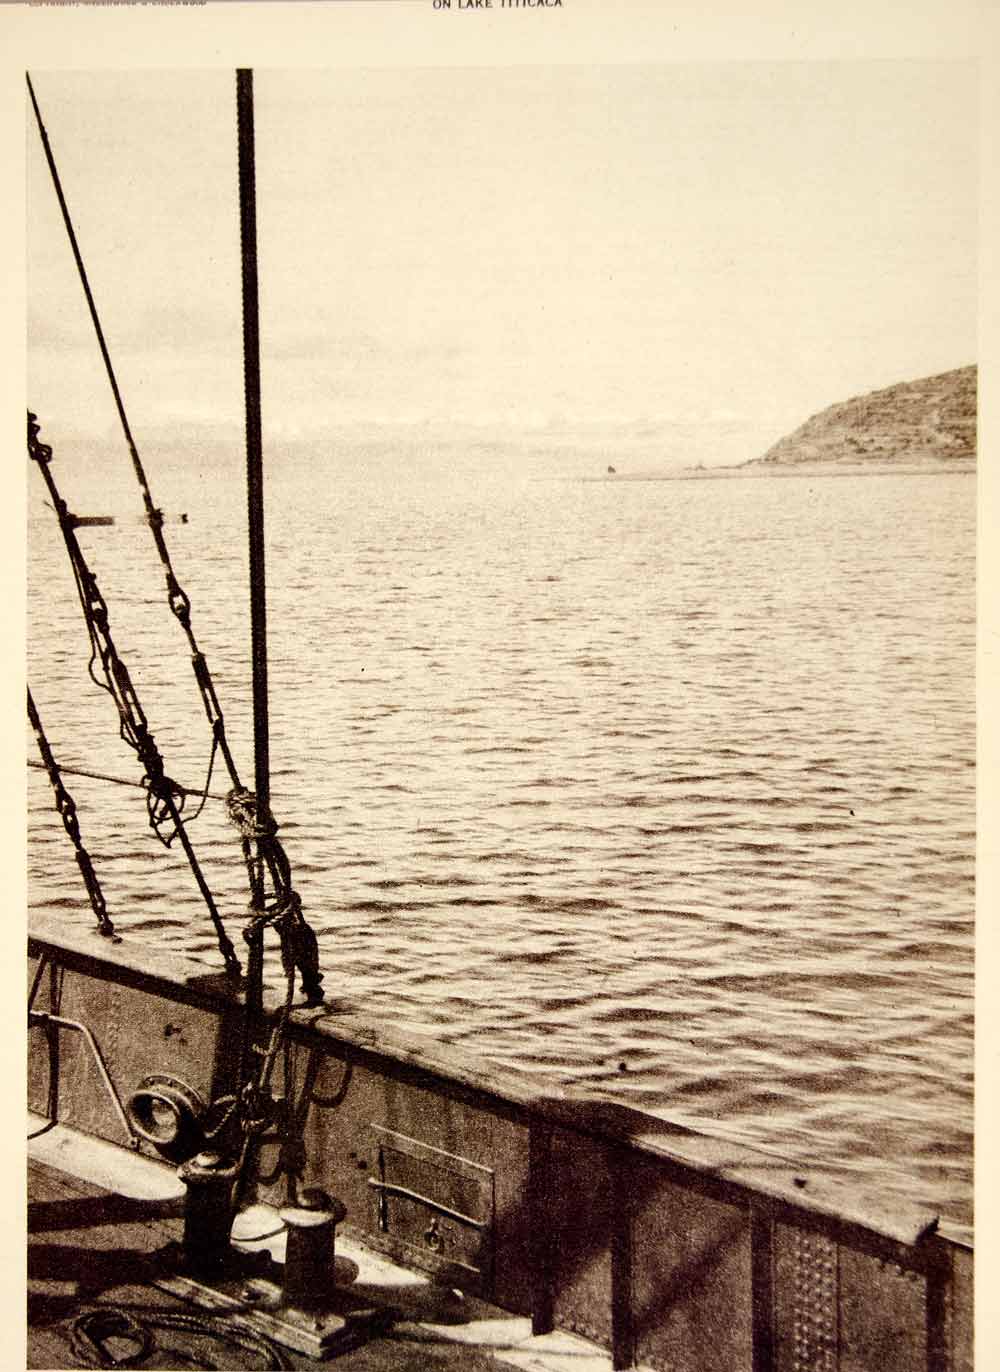 1920 Photogravure Lake Titicaca Titiqaqa Peru Bolivia South America Lago YTTM3